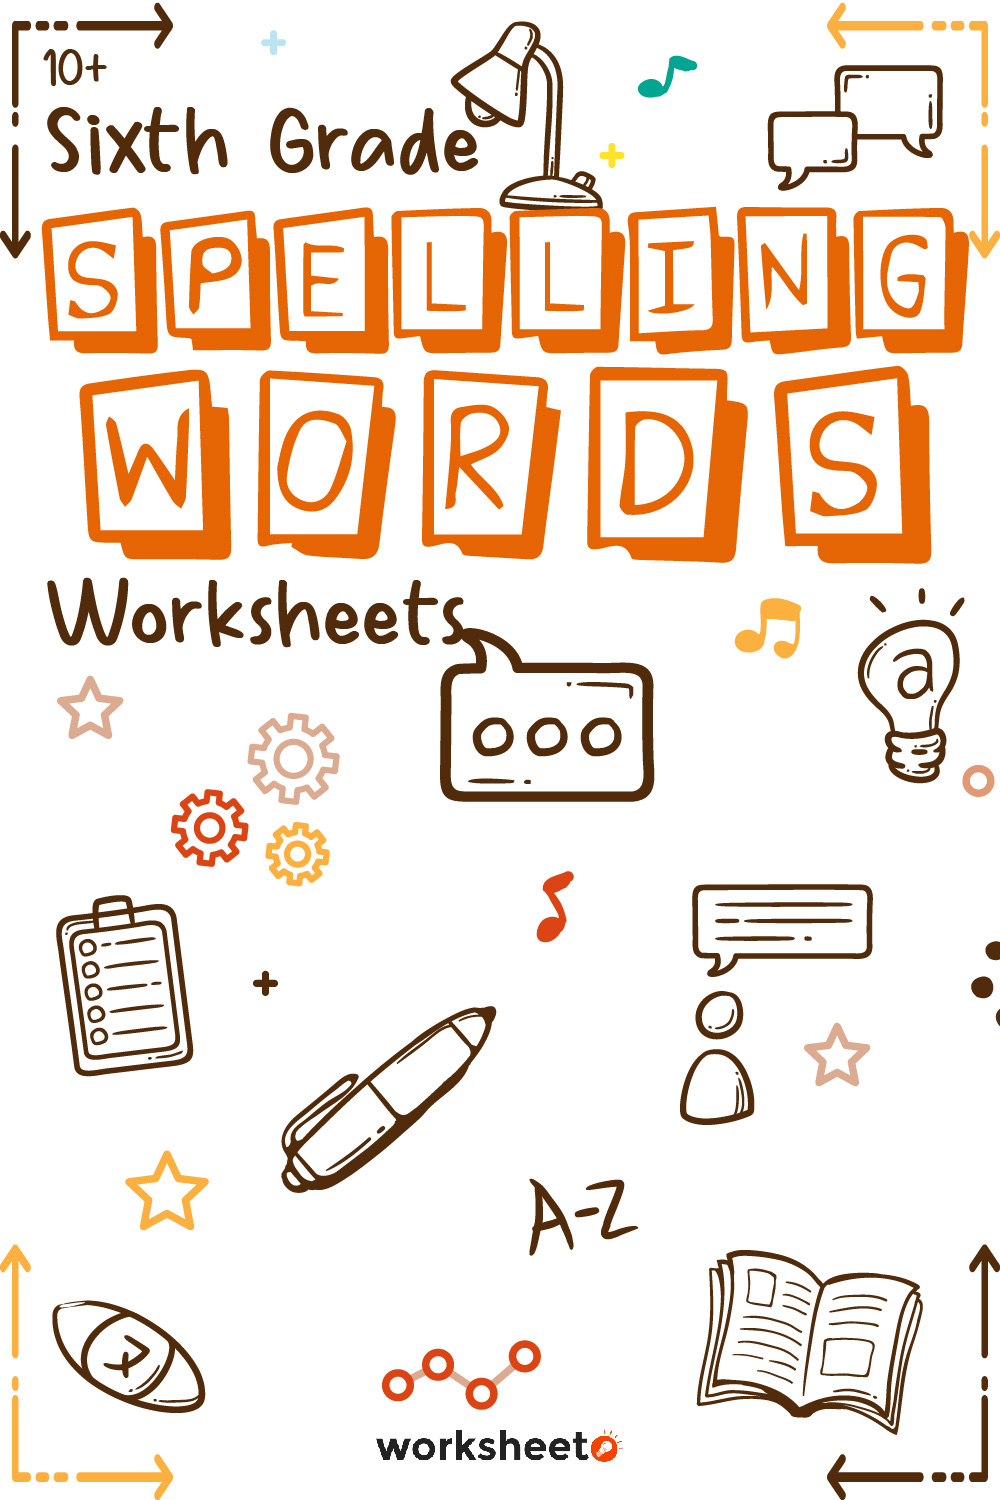 Sixth Grade Spelling Words Worksheets